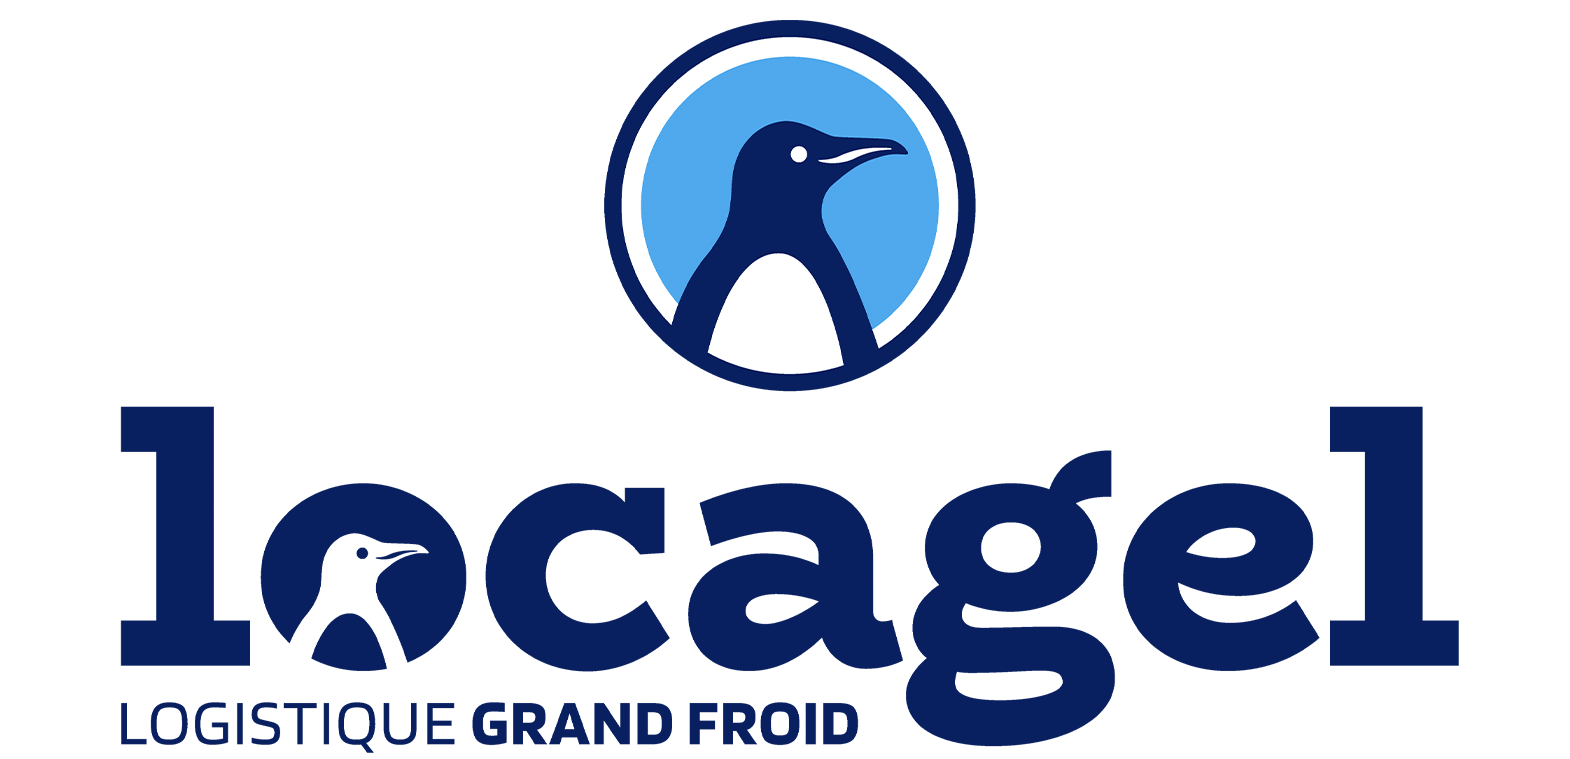 Logo Locagel